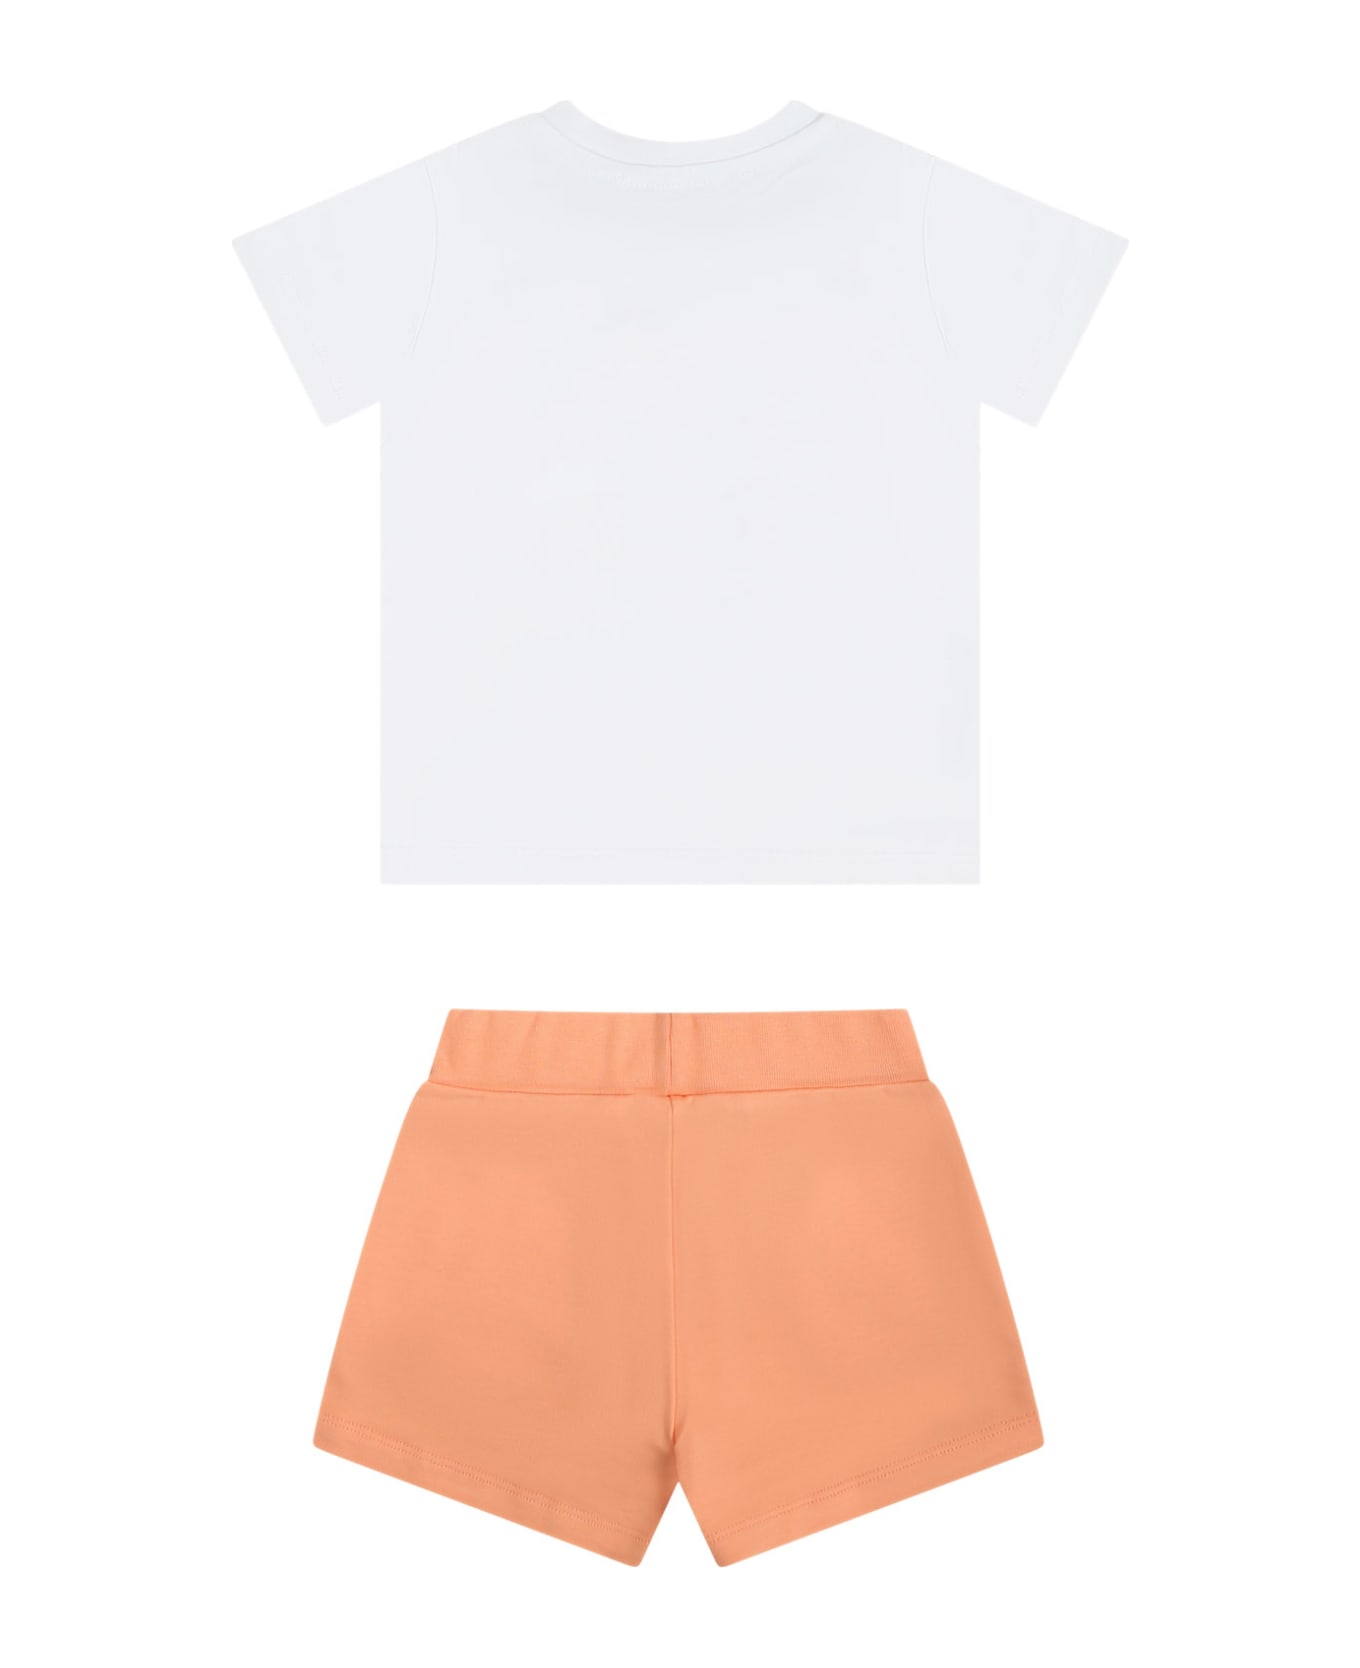 MSGM Orange Set For Baby Girl With Logo - Orange